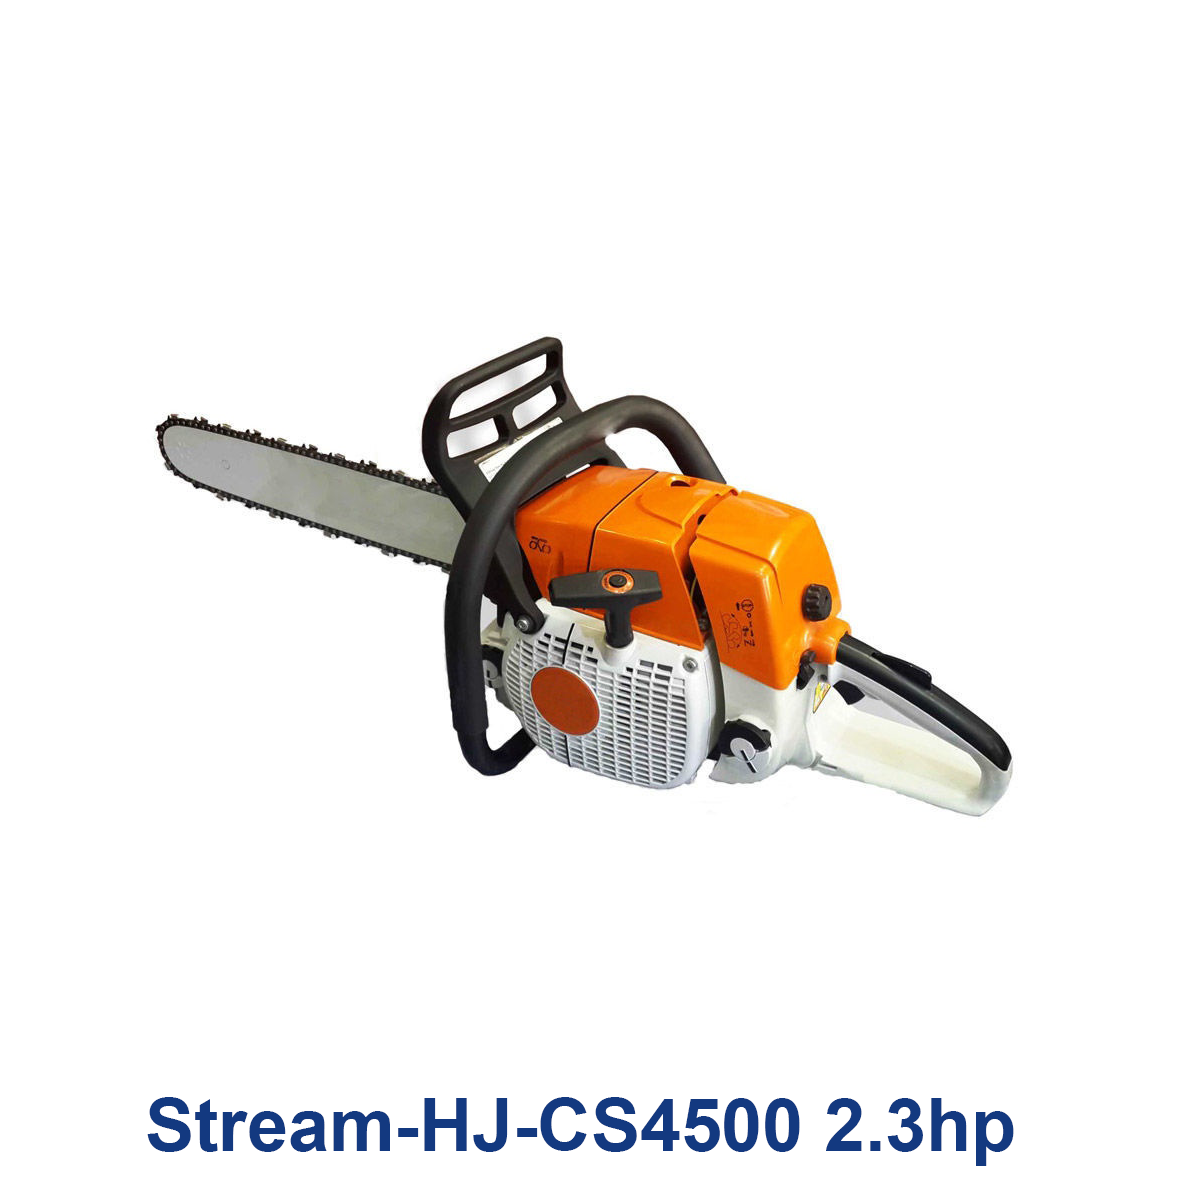 Stream-HJ-CS4500